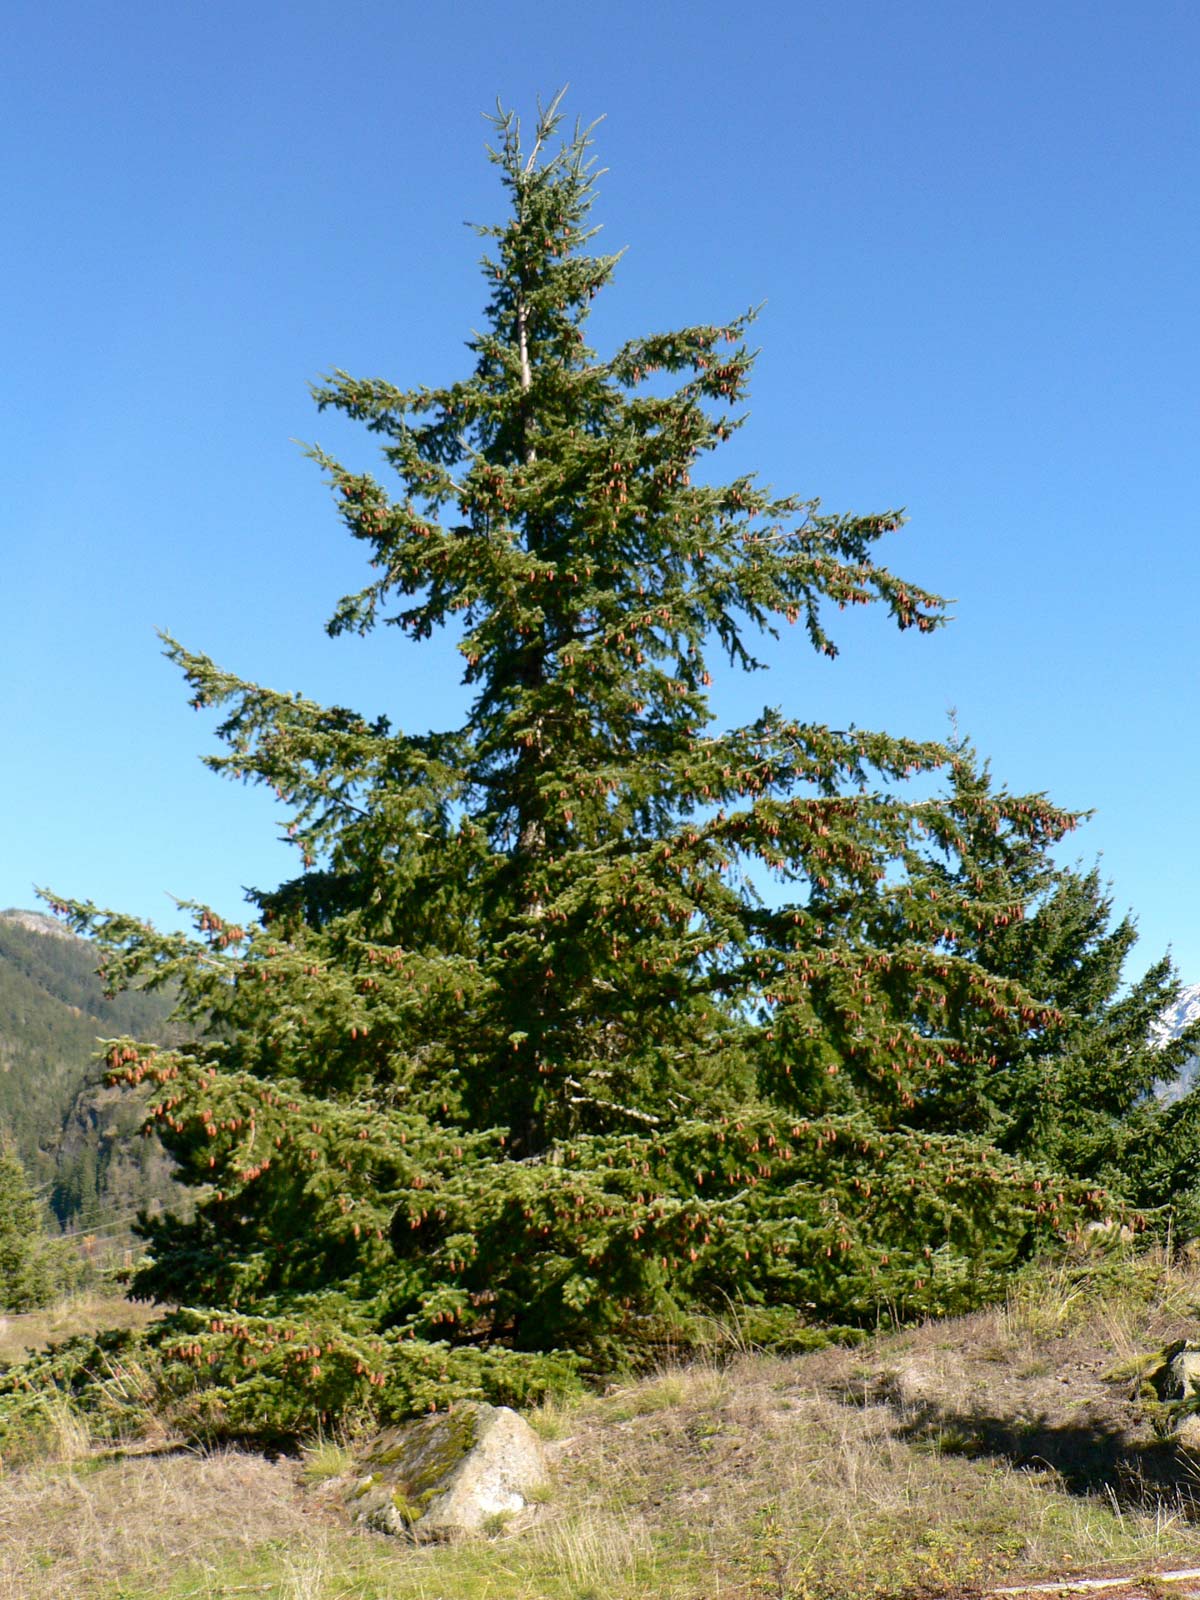 State tree of Oregon